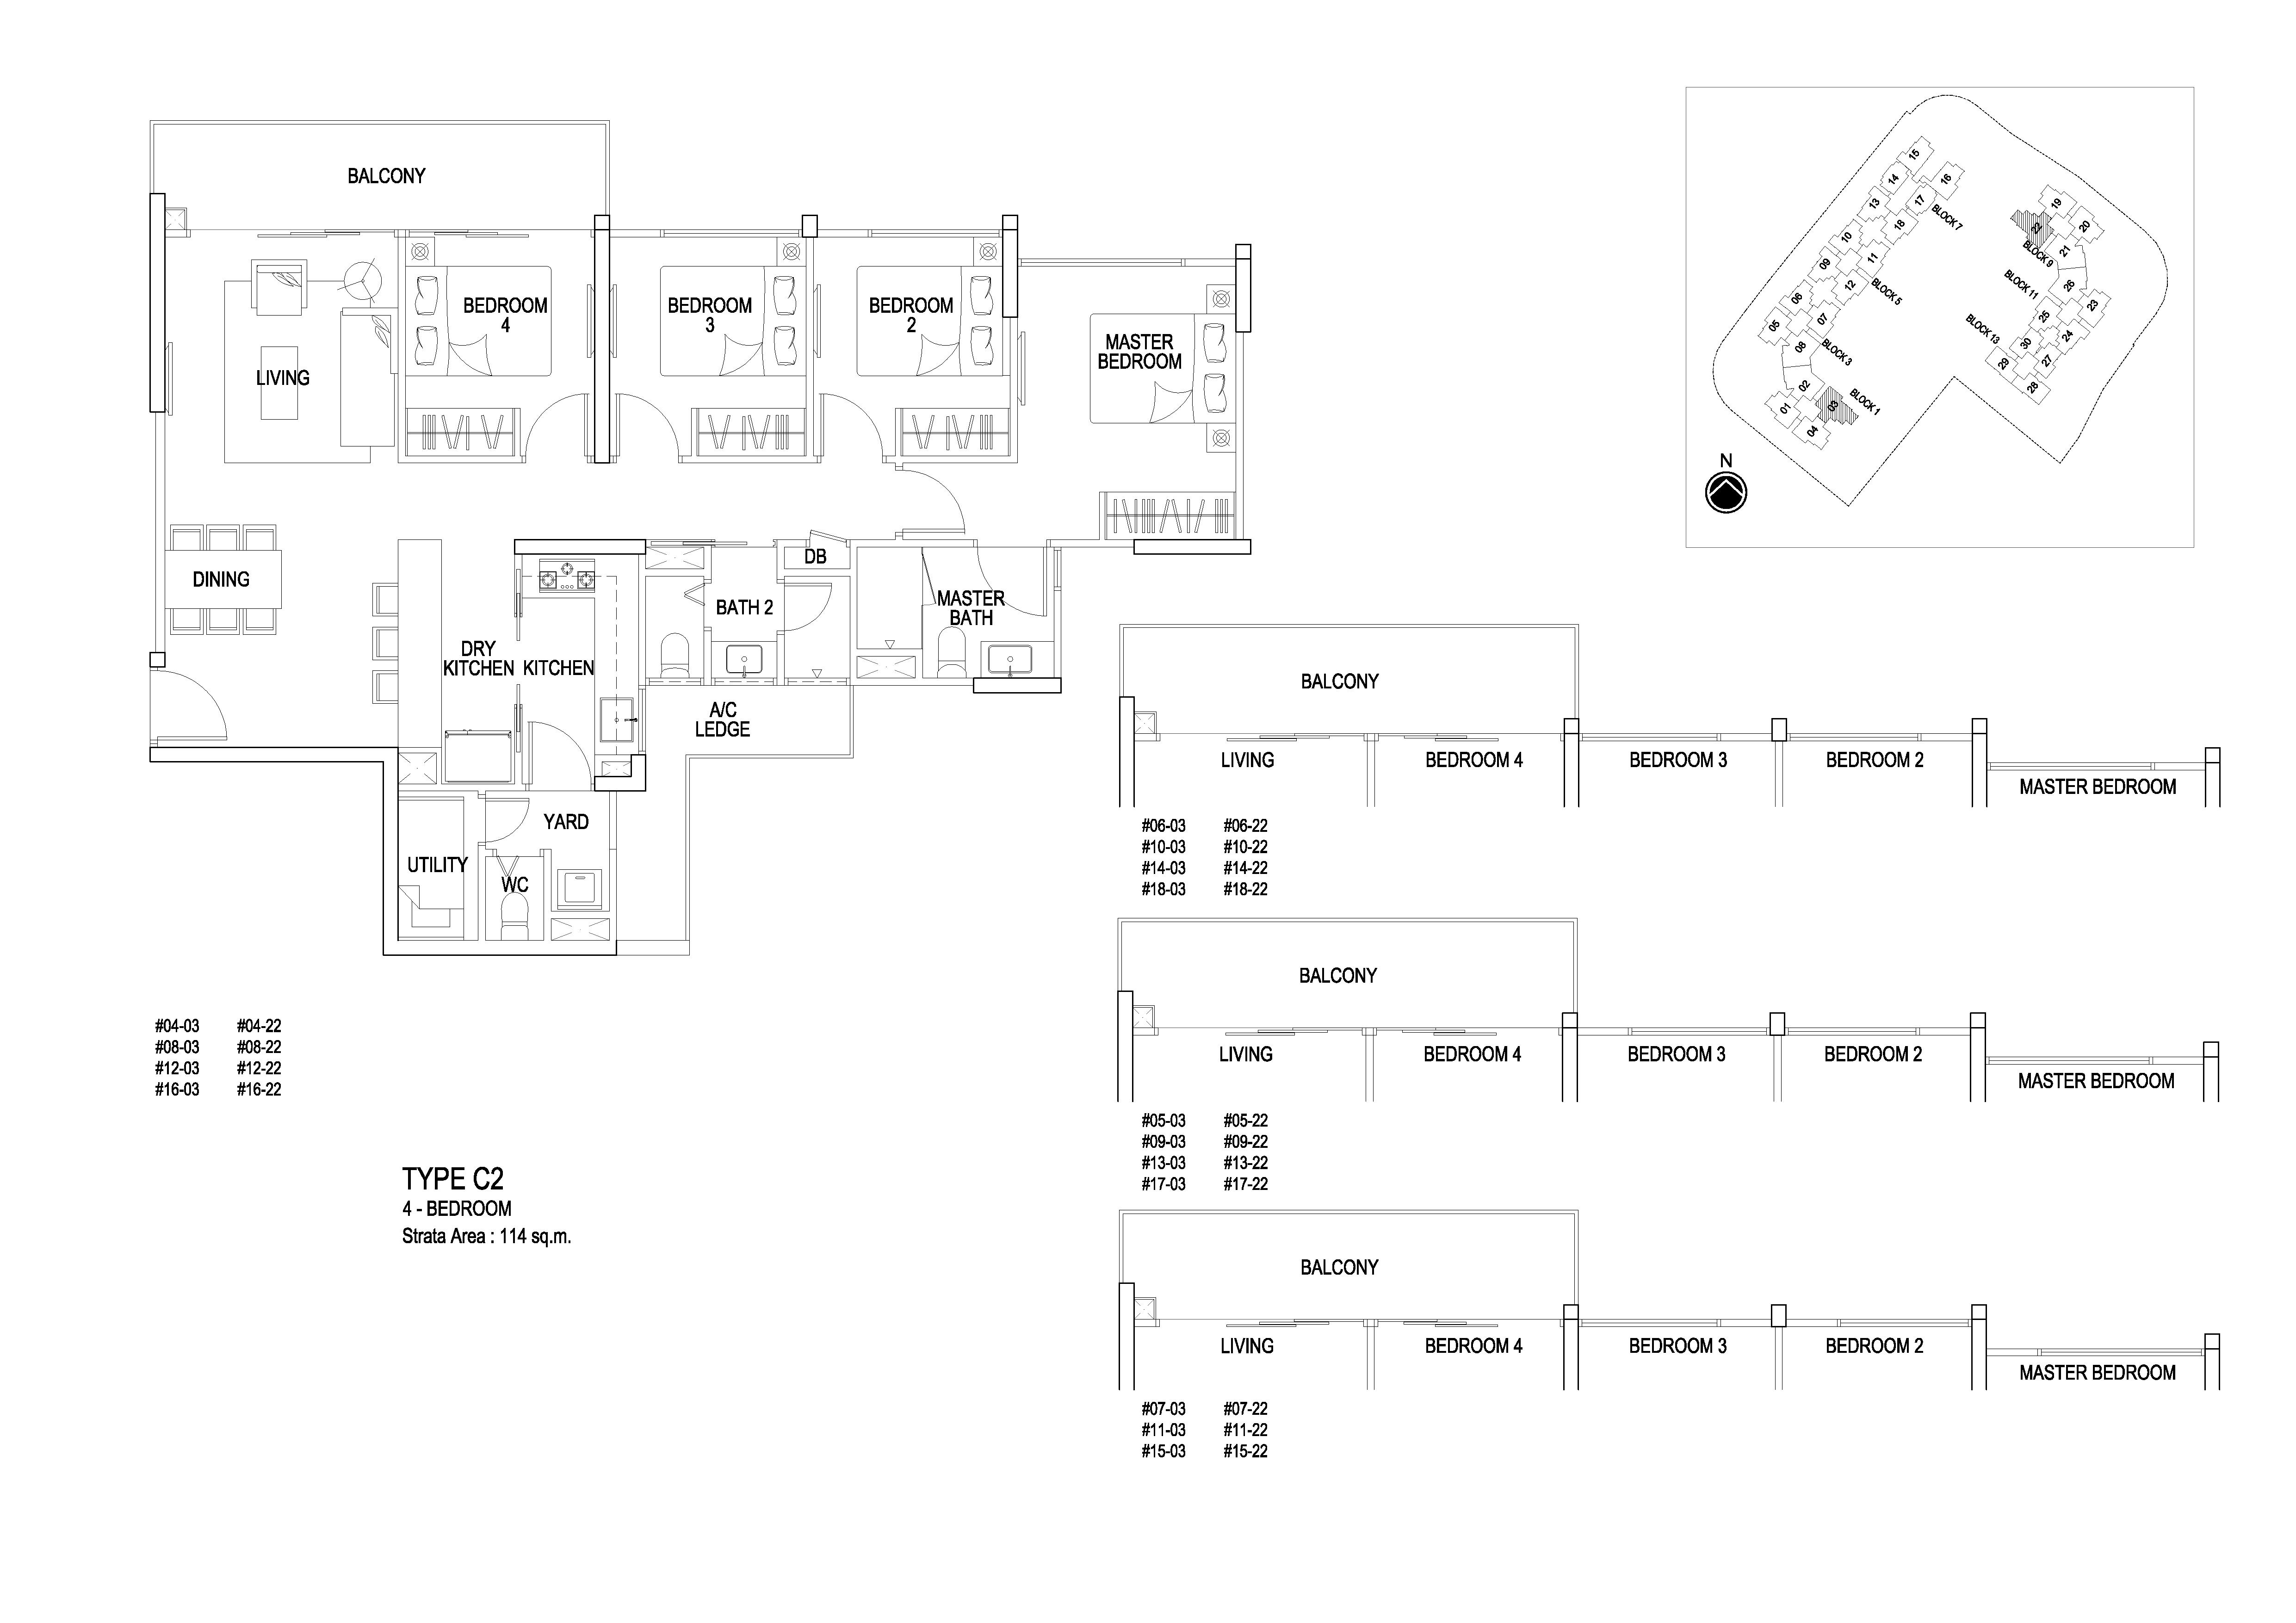 Flo Residence 4 Bedroom Floor Plans Type C2